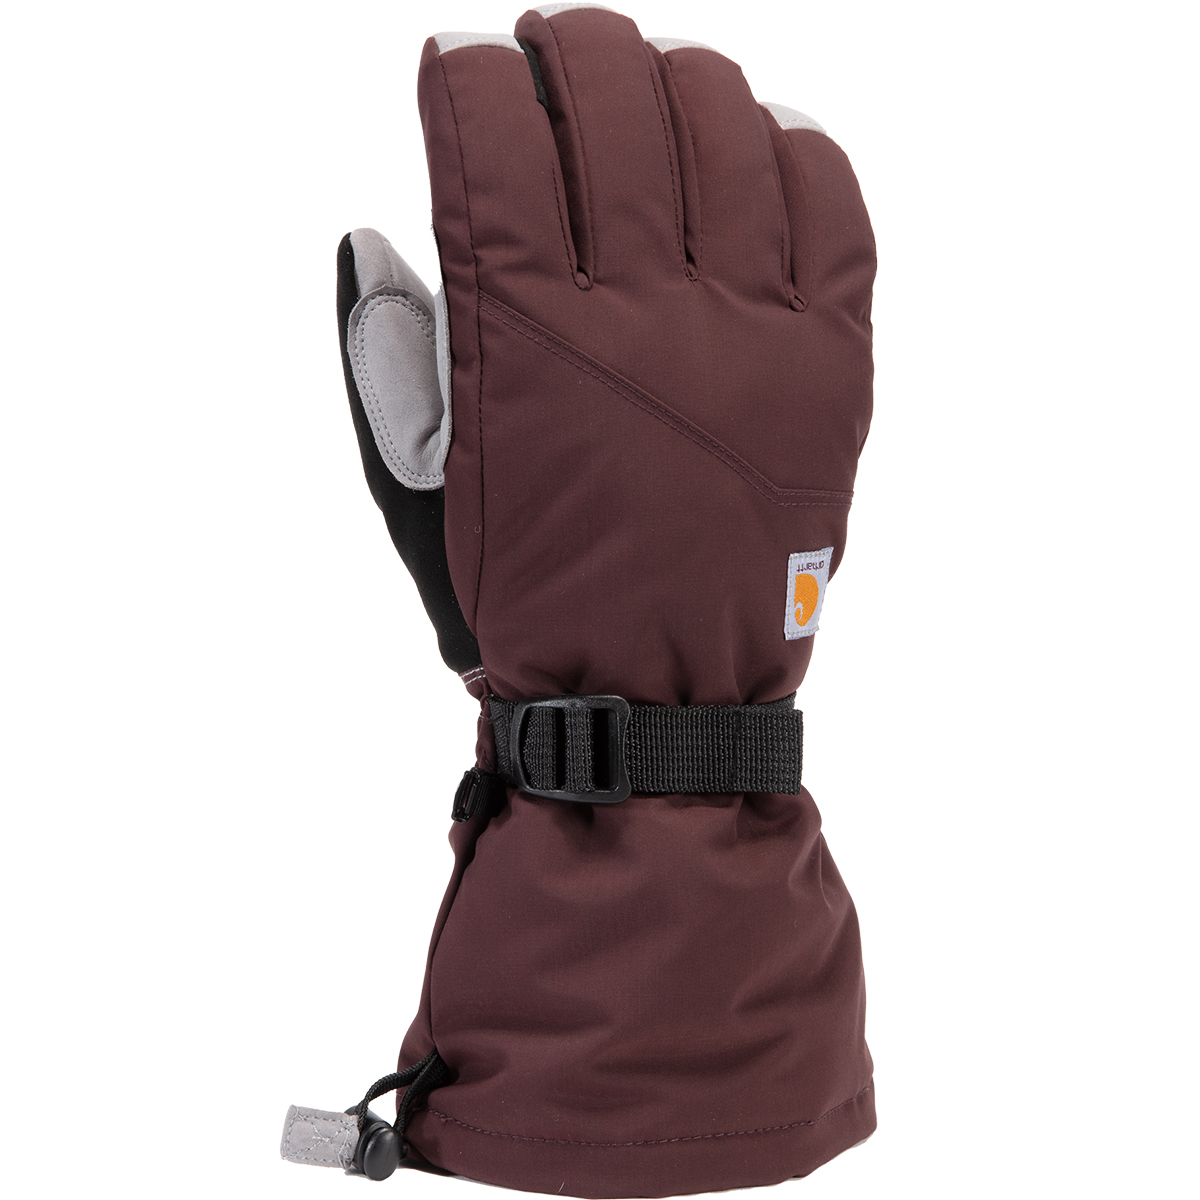 Carhartt Women's Storm Defender Insulated Gauntlet Gloves